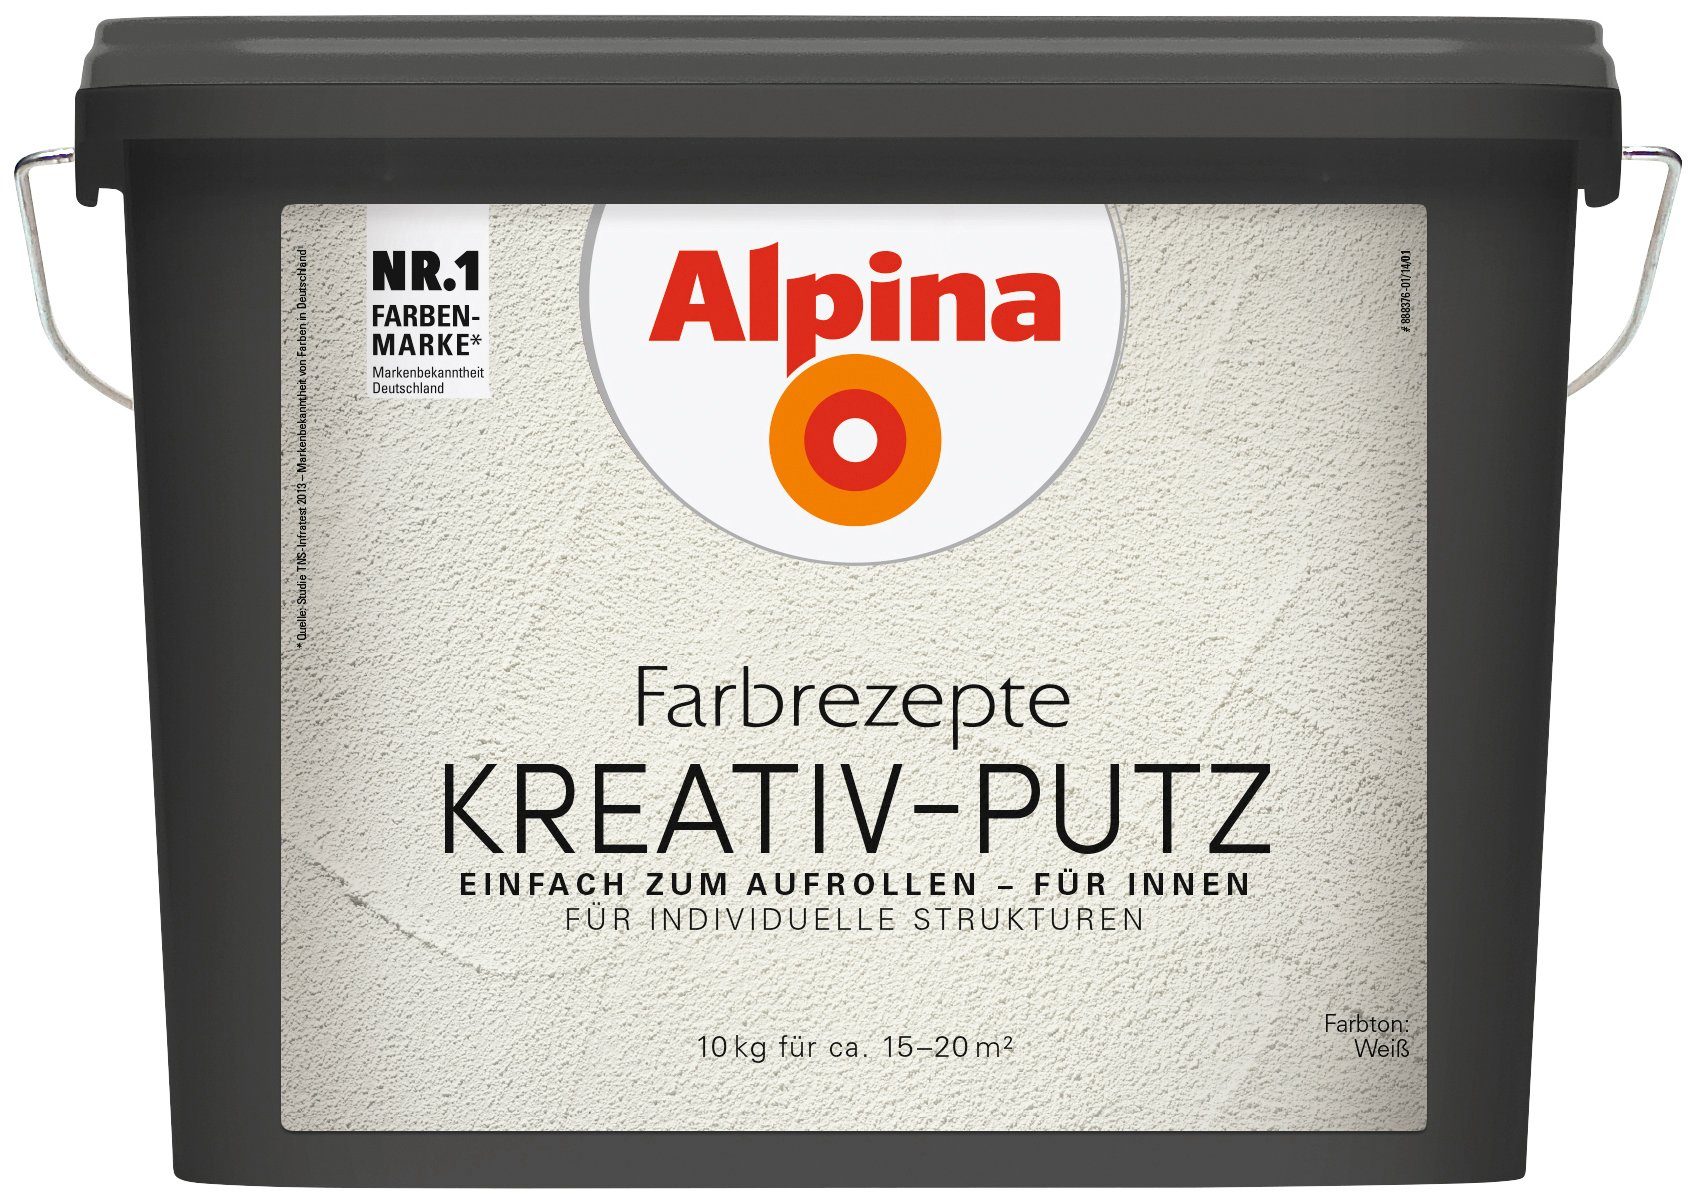 Kunstharzputz 10 kg Farbrezepte - Alpina Kreativ-Putz weiß,